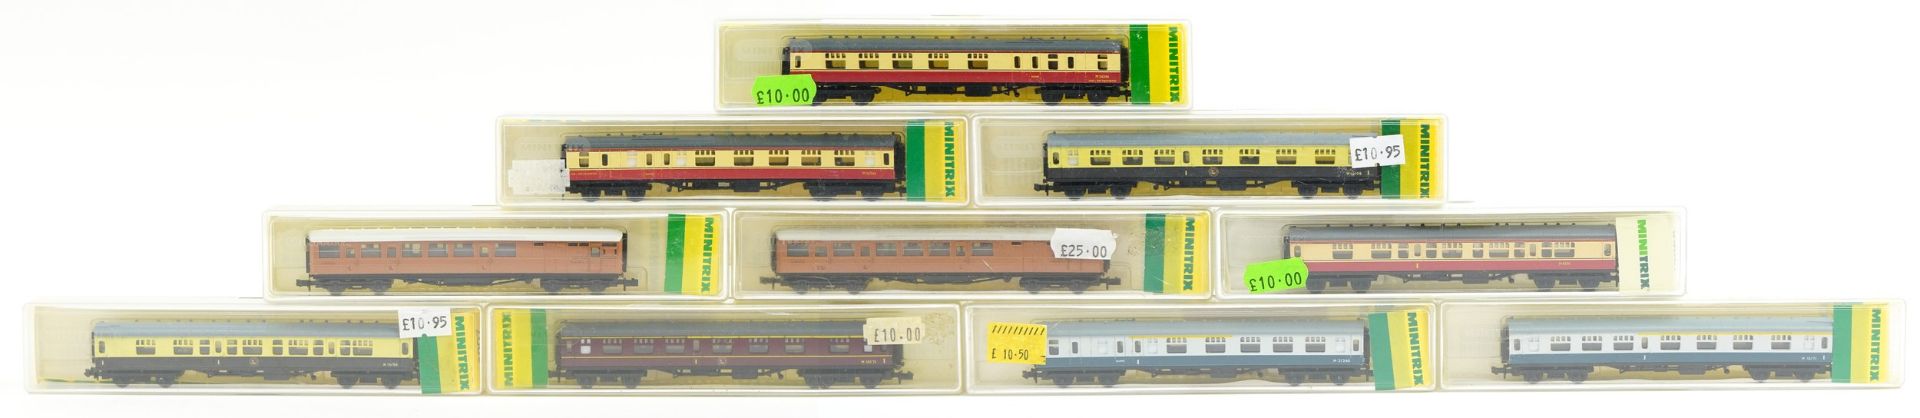 Ten Minitrix N gauge model railway carriages with cases, numbers 13003, 13004, 13005, 13006,